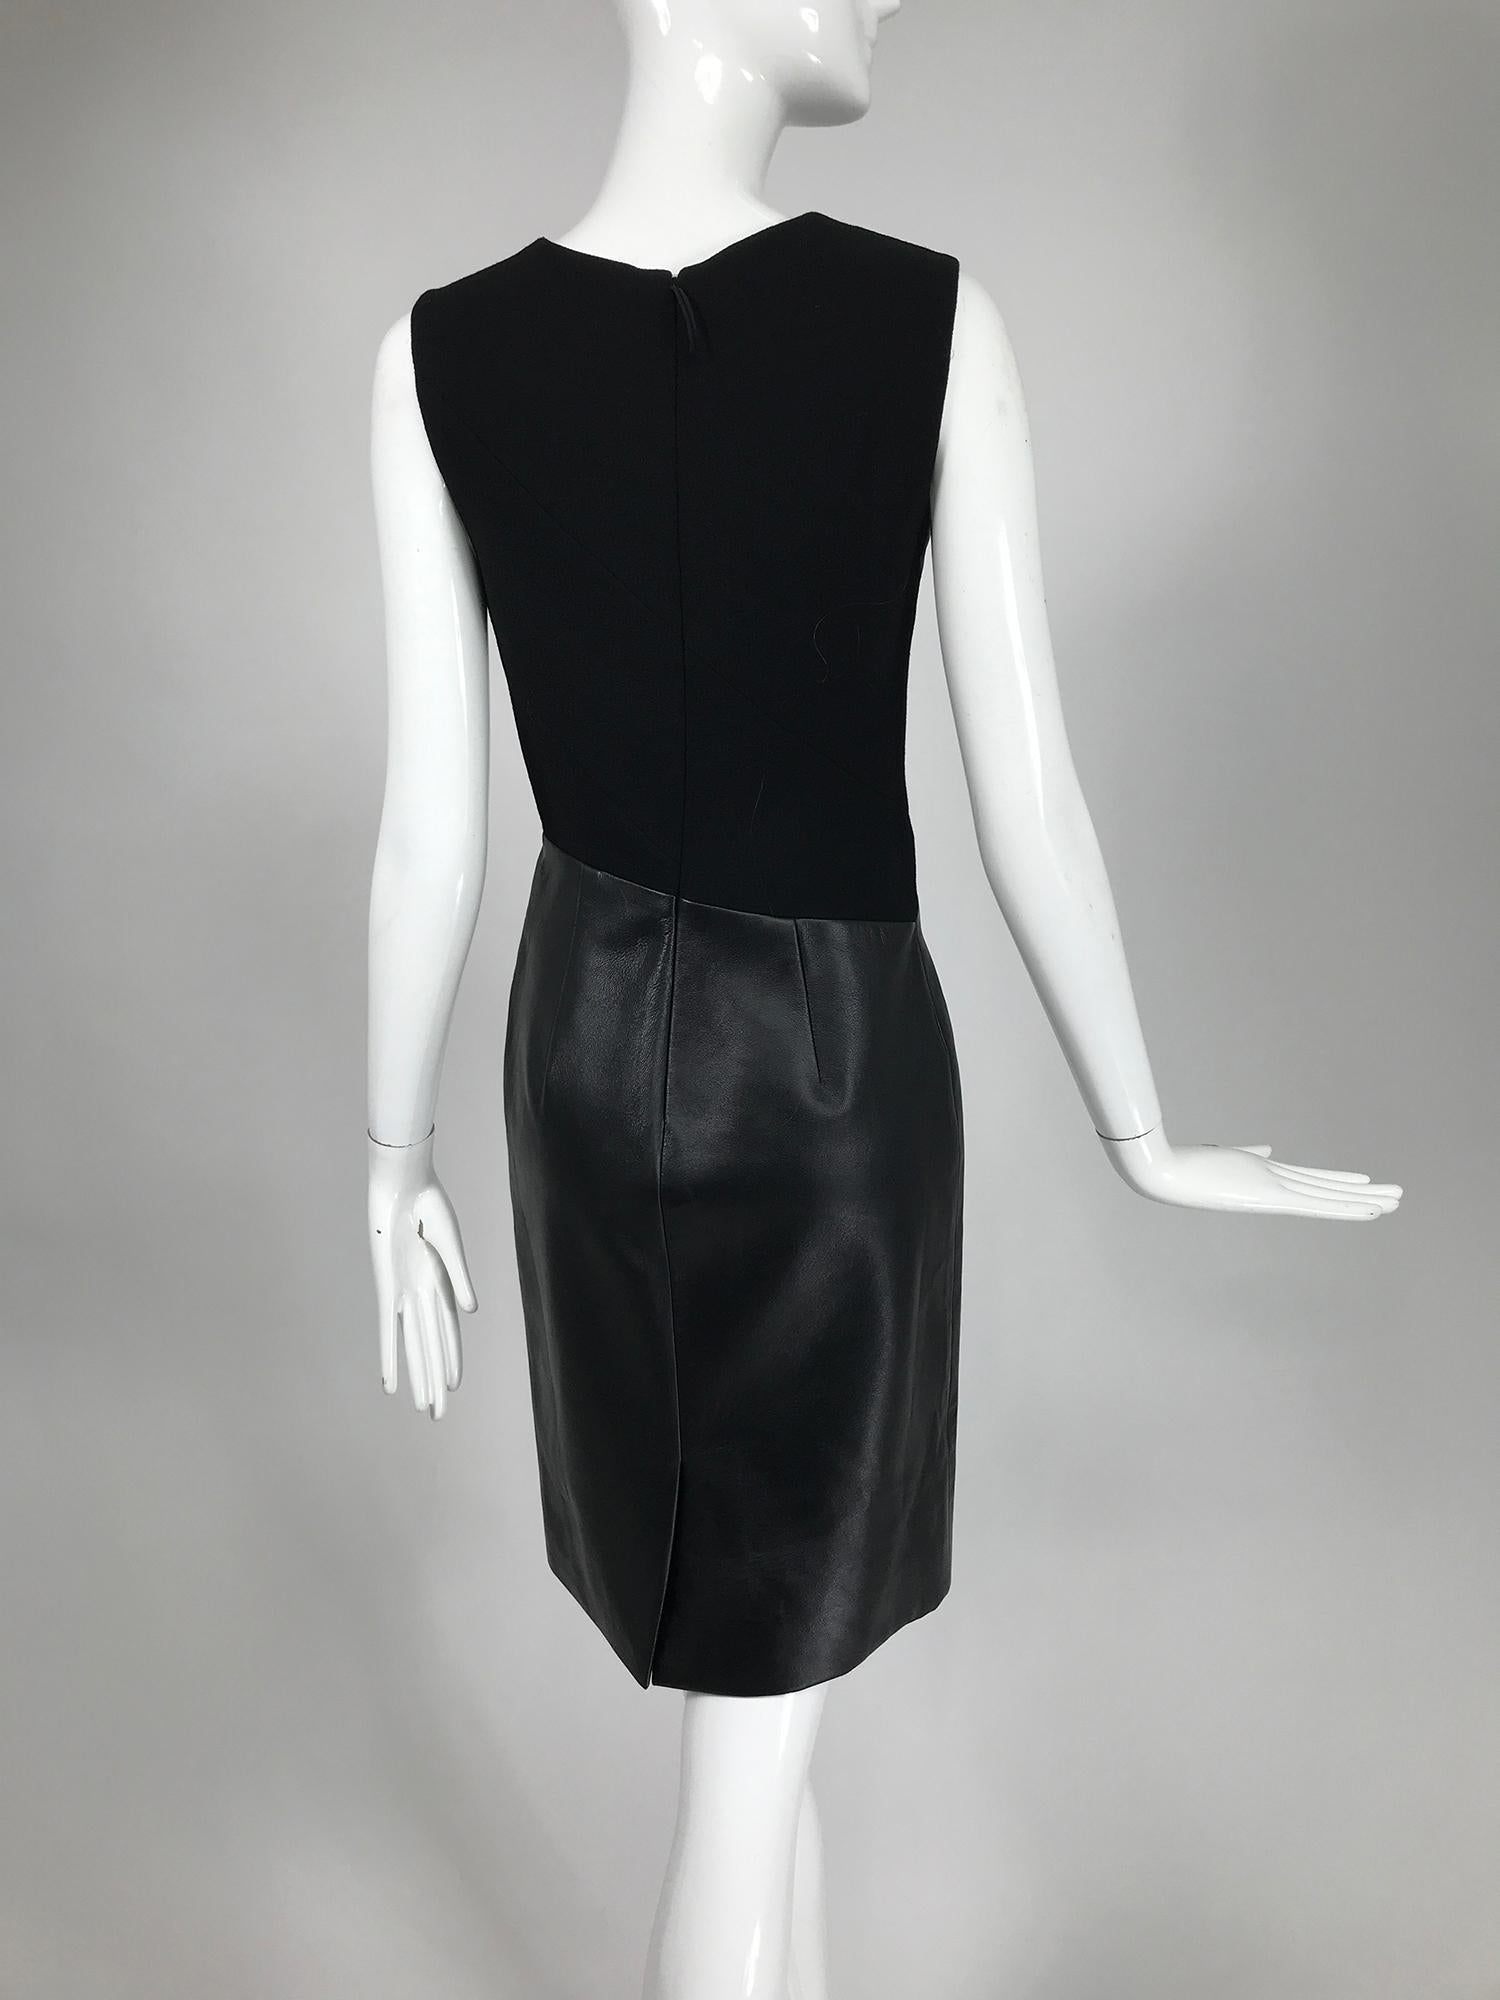 J. Mendel Paris Black Wool & Leather Sheath Dress  In Excellent Condition In West Palm Beach, FL